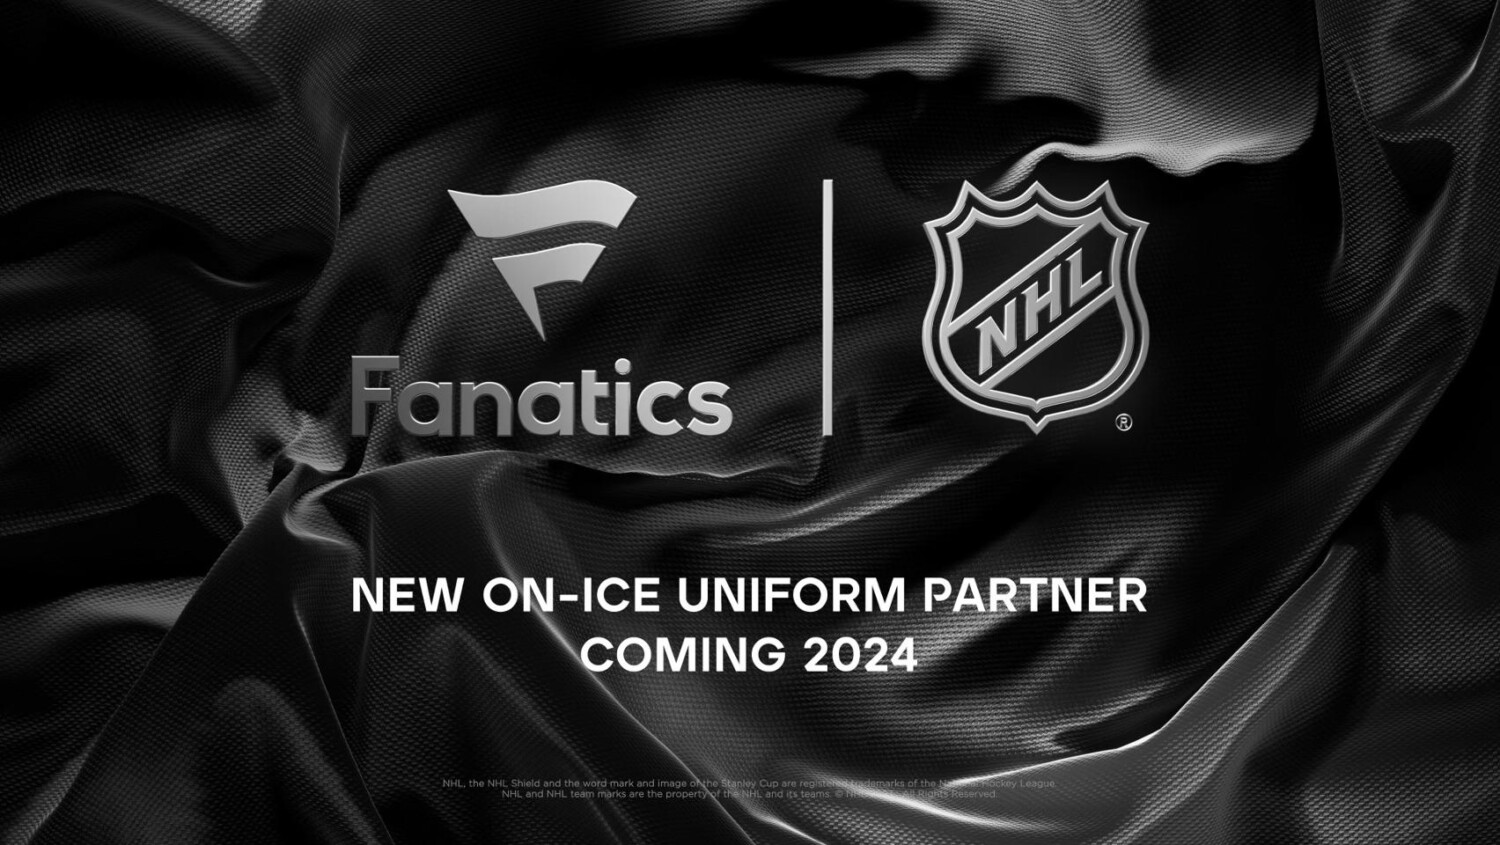 NHL Fanatics News Deal Makes Retailer Official Apparel Partner